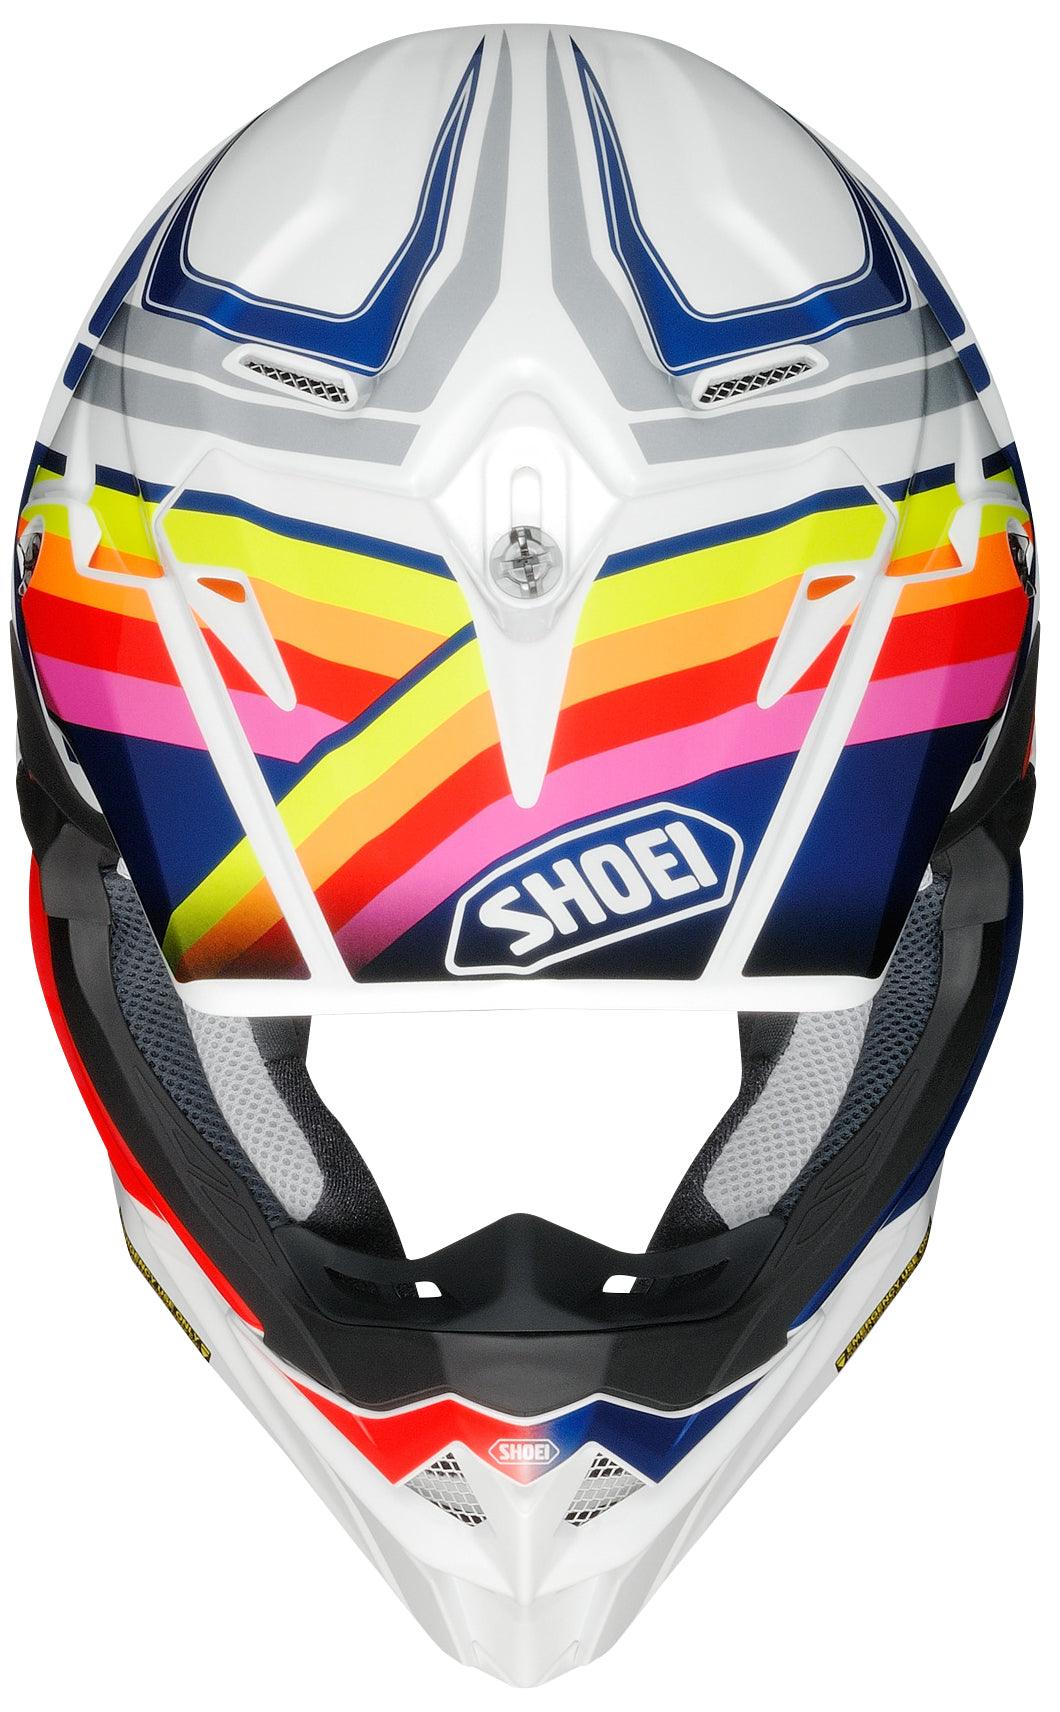 Shoei VFX-EVO Pinnacle Helmets - TC-1 Red/Dark Blue/White - Motor Psycho Sport